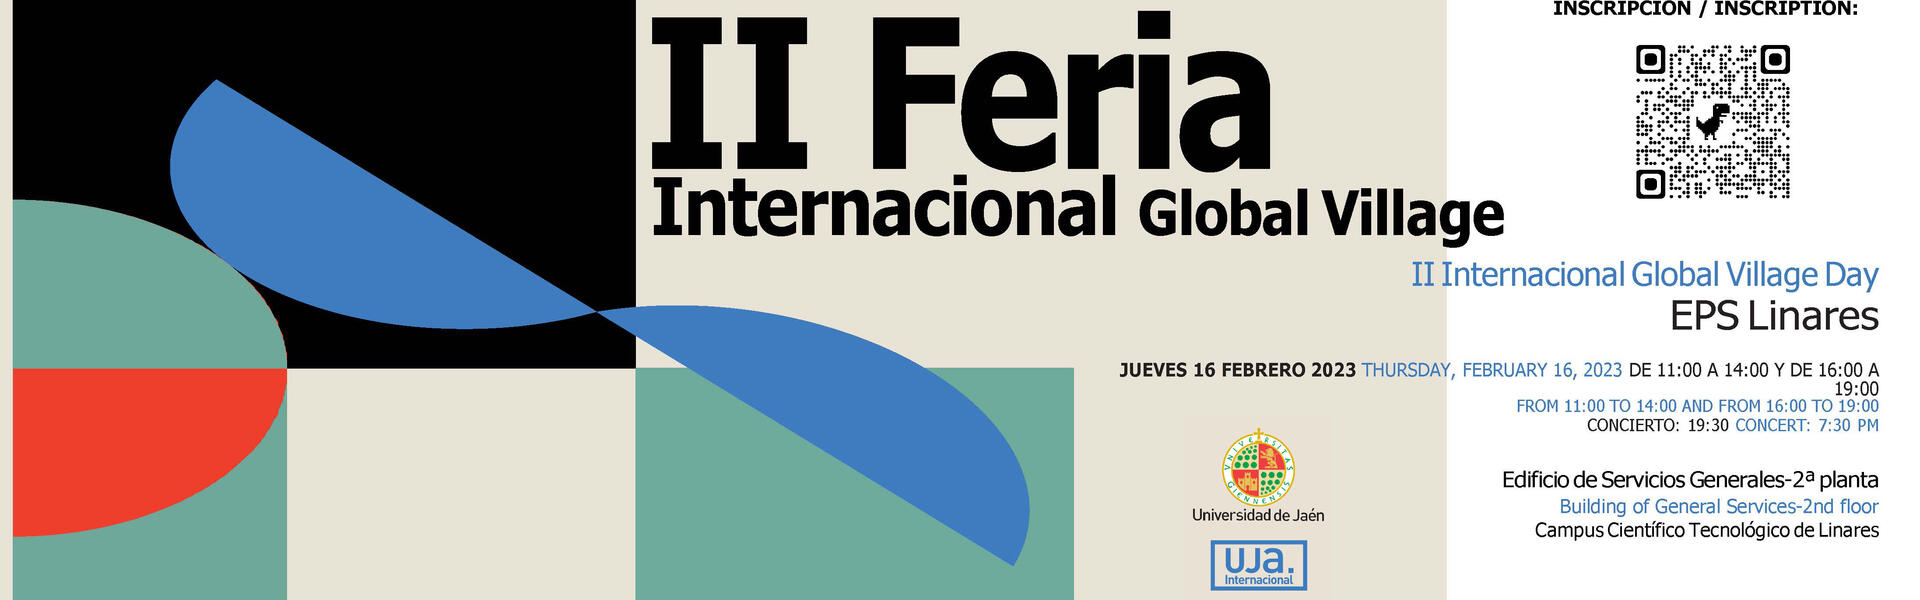 II Feria Internacional Global Village